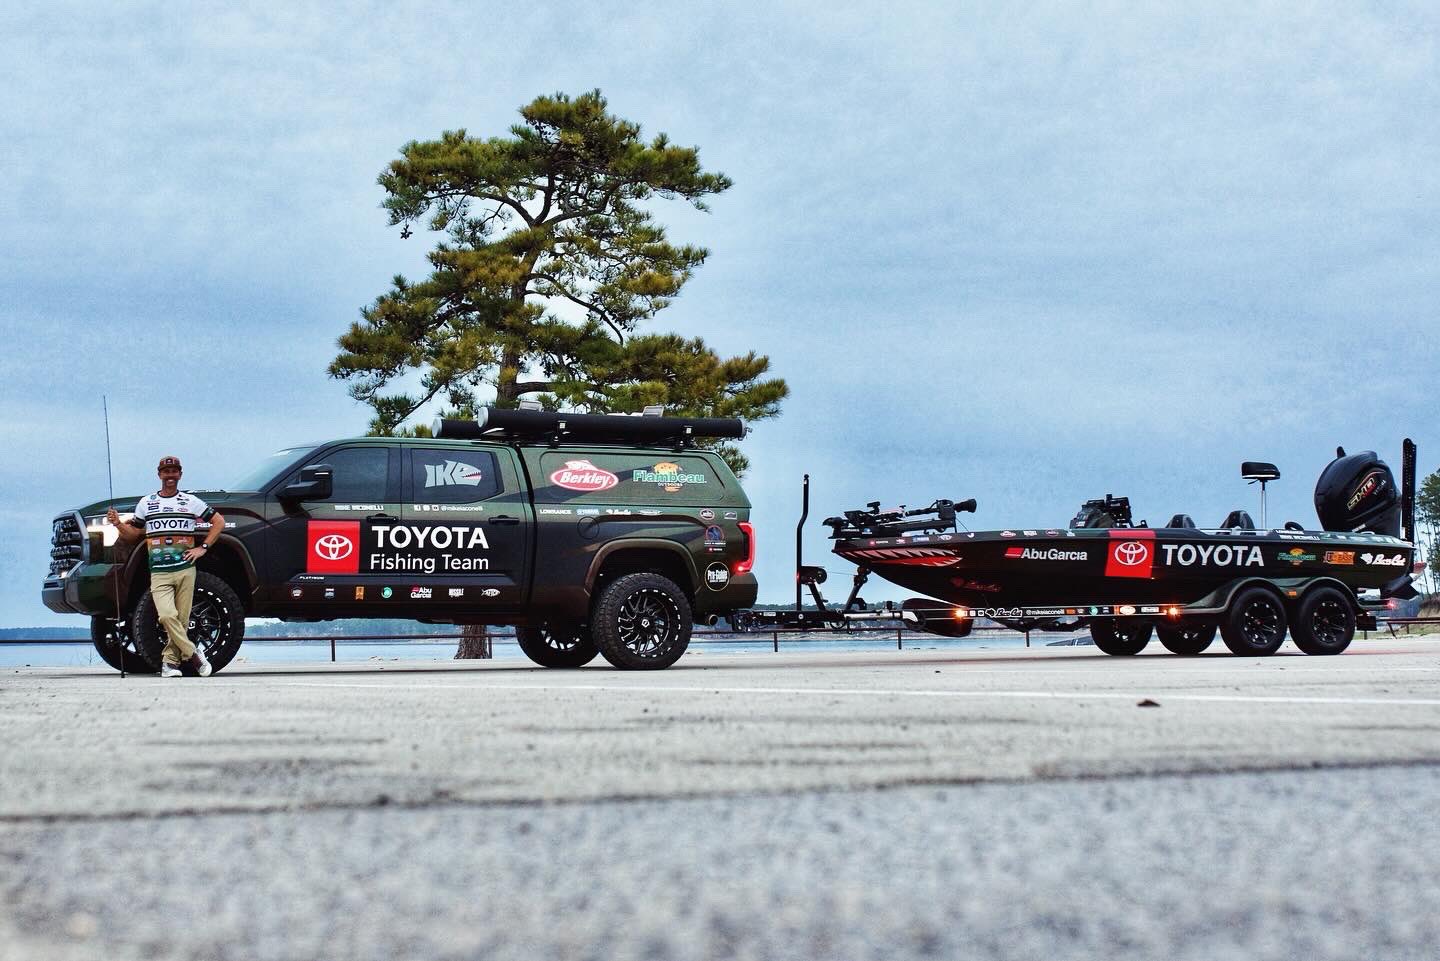 Iaconelli's 2018 Toyota Fishing Team Truck Fishing Photo